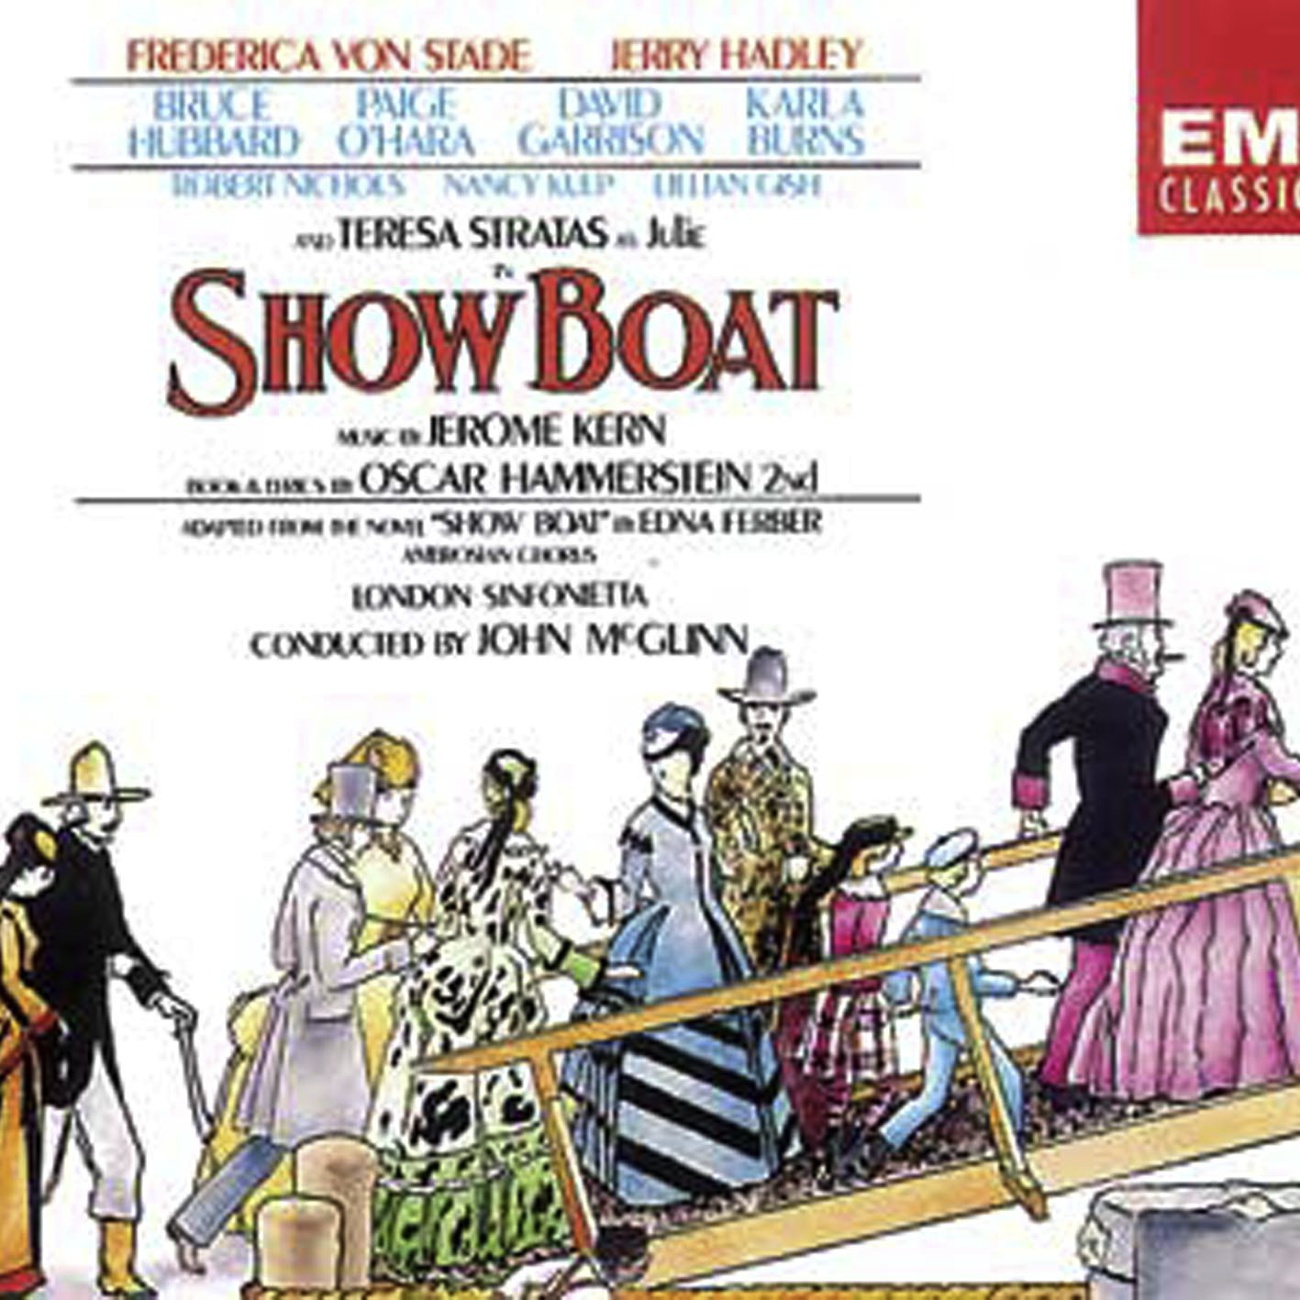 Show Boat, ACT 2, Scene 7: Hey, feller